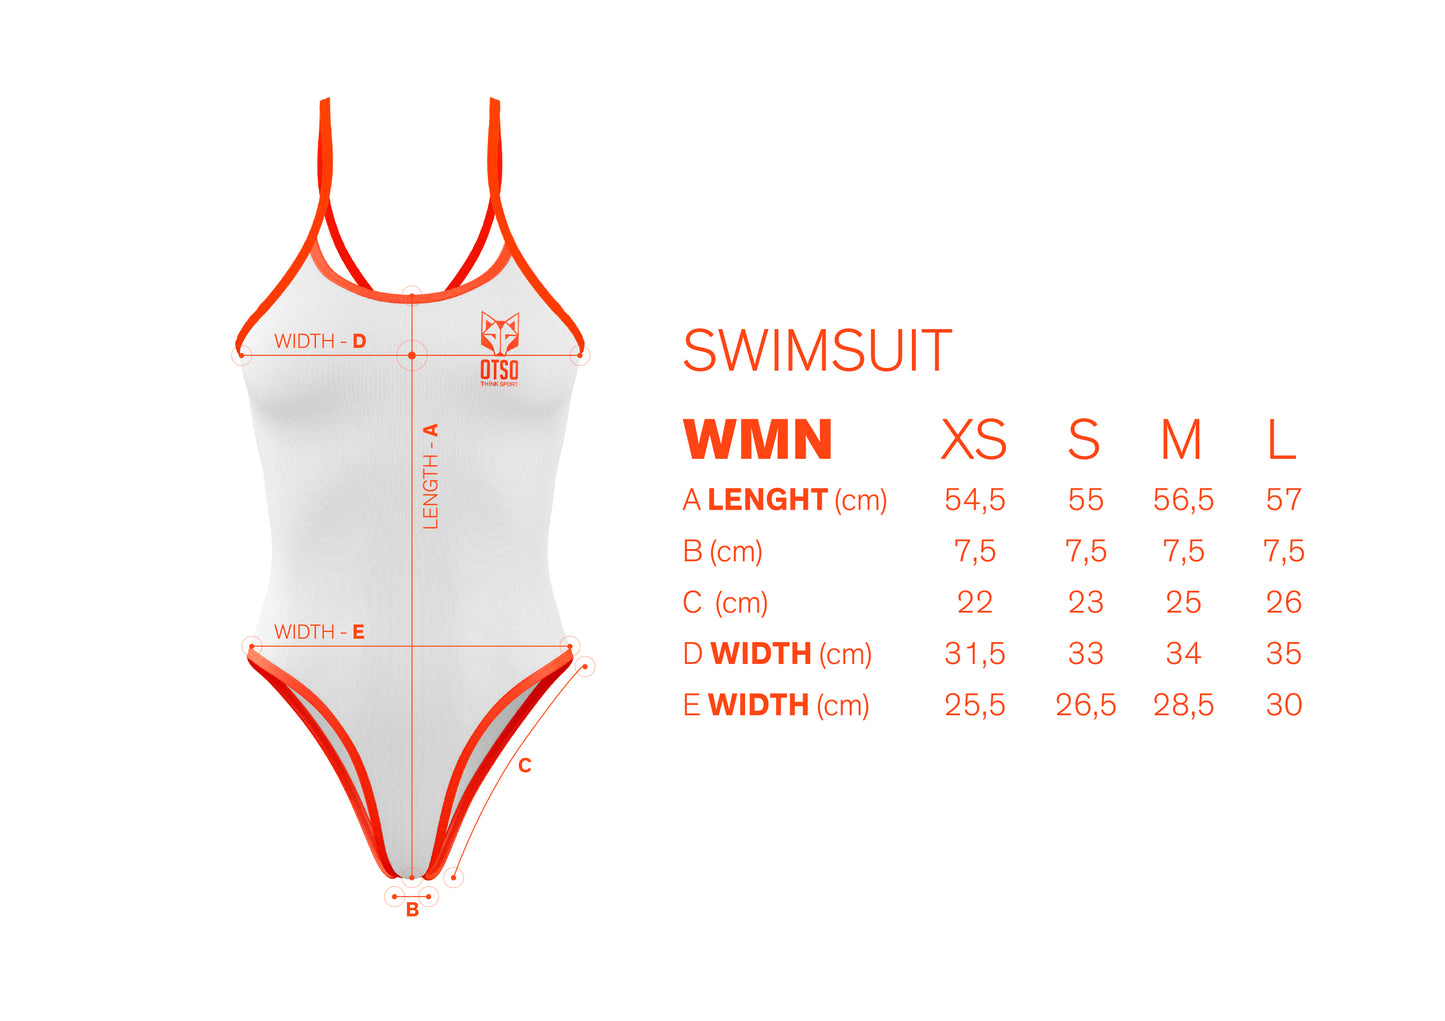 Women's swimsuit - Swim Bike Run Flower